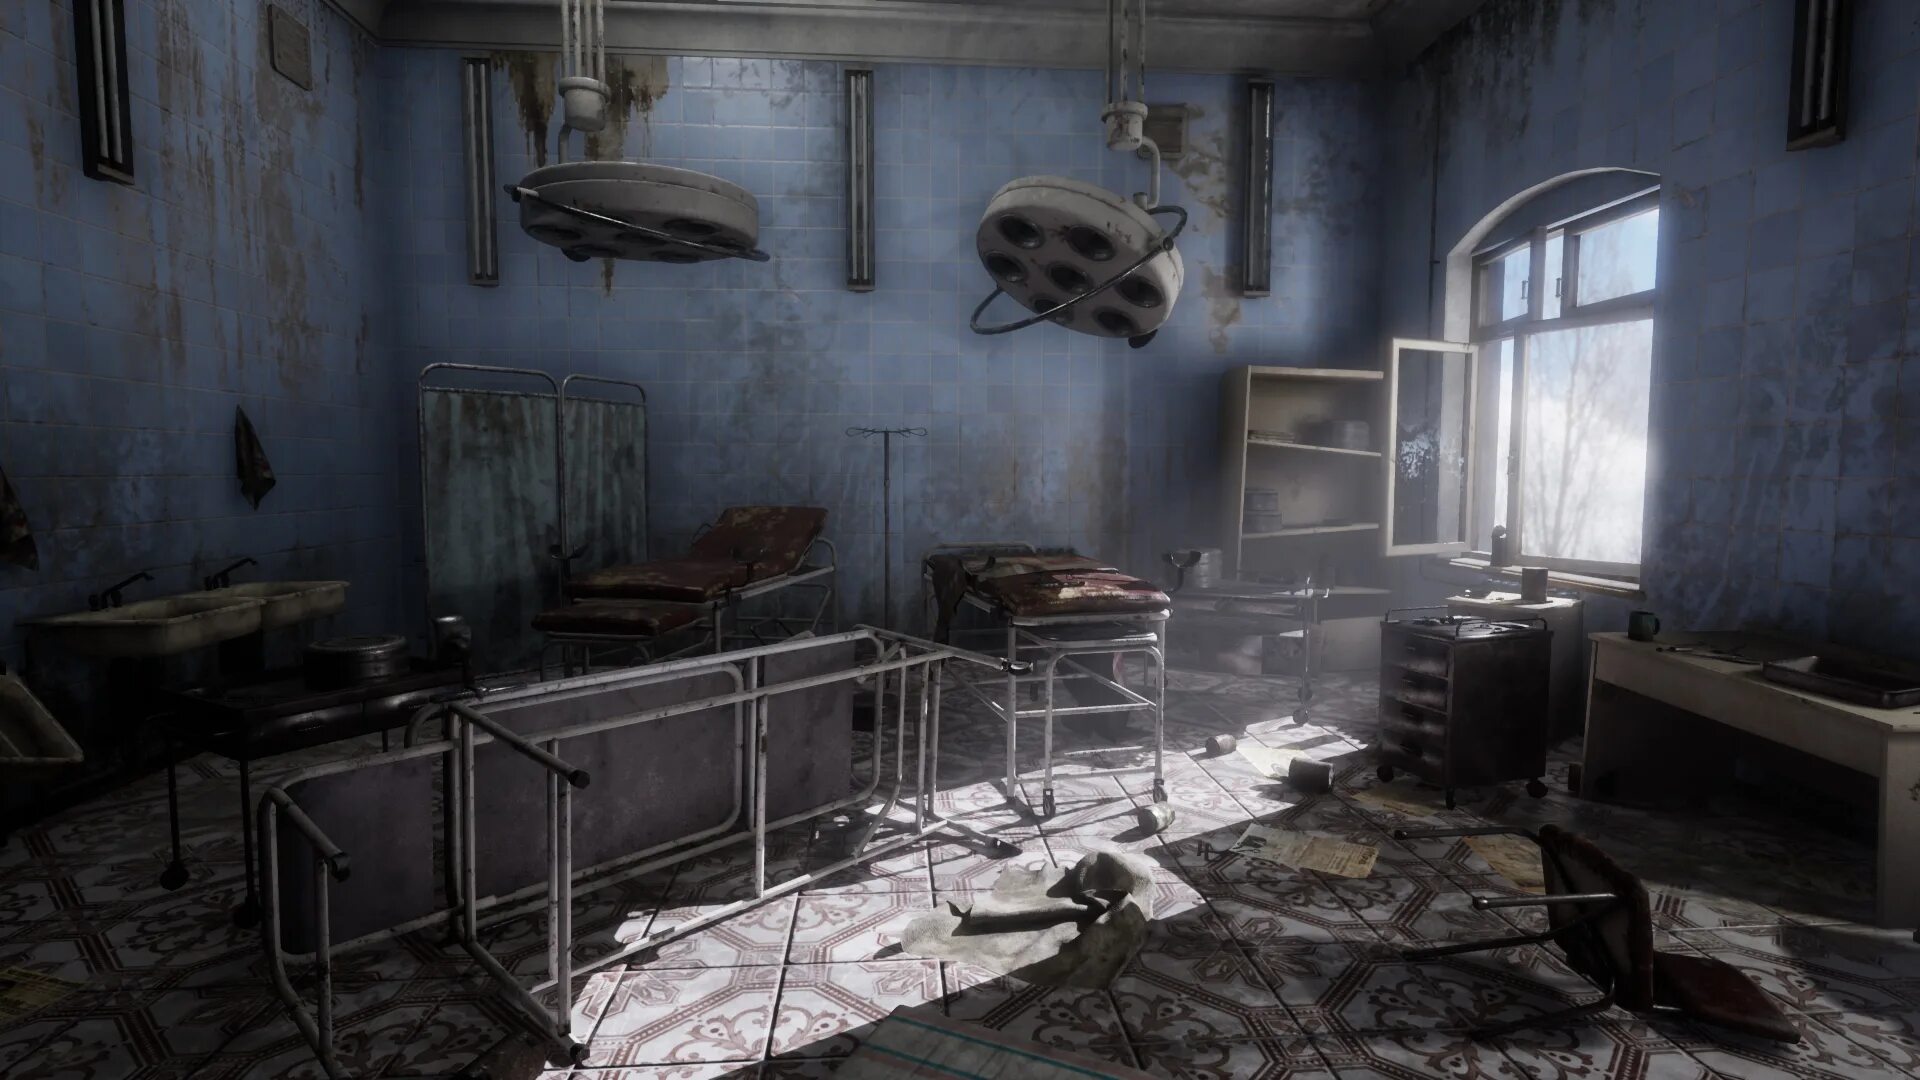 Abandoned Soviet Maternity Hospital. Госпиталь зомби апокалипсис. Заброшенные больницы зомби апокалипсиса.